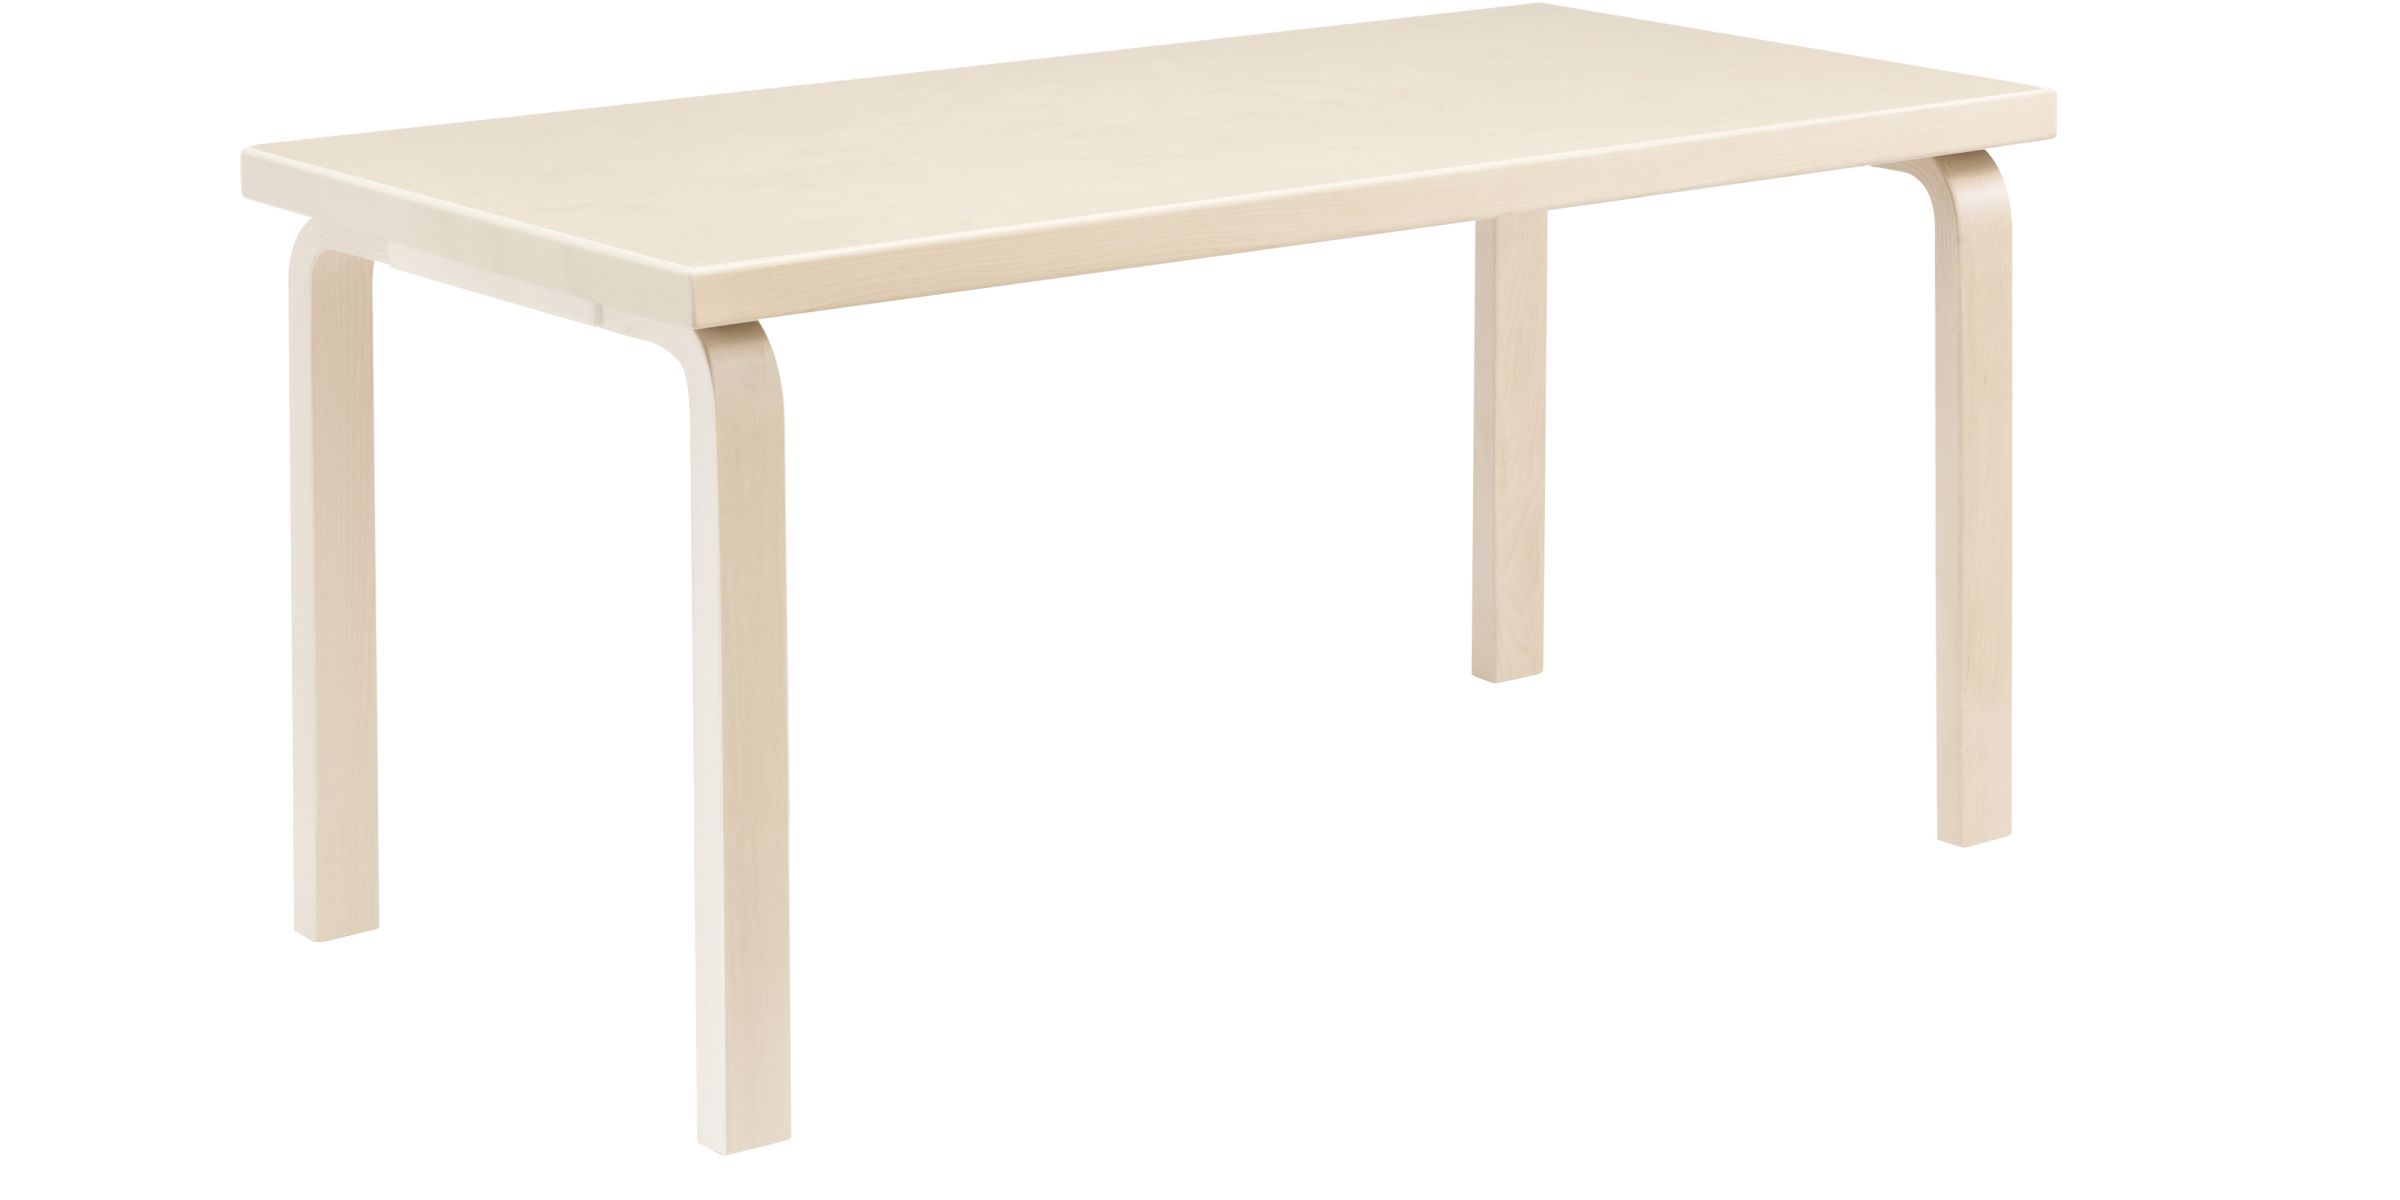 Artek - Aalto Children's Table rectangular